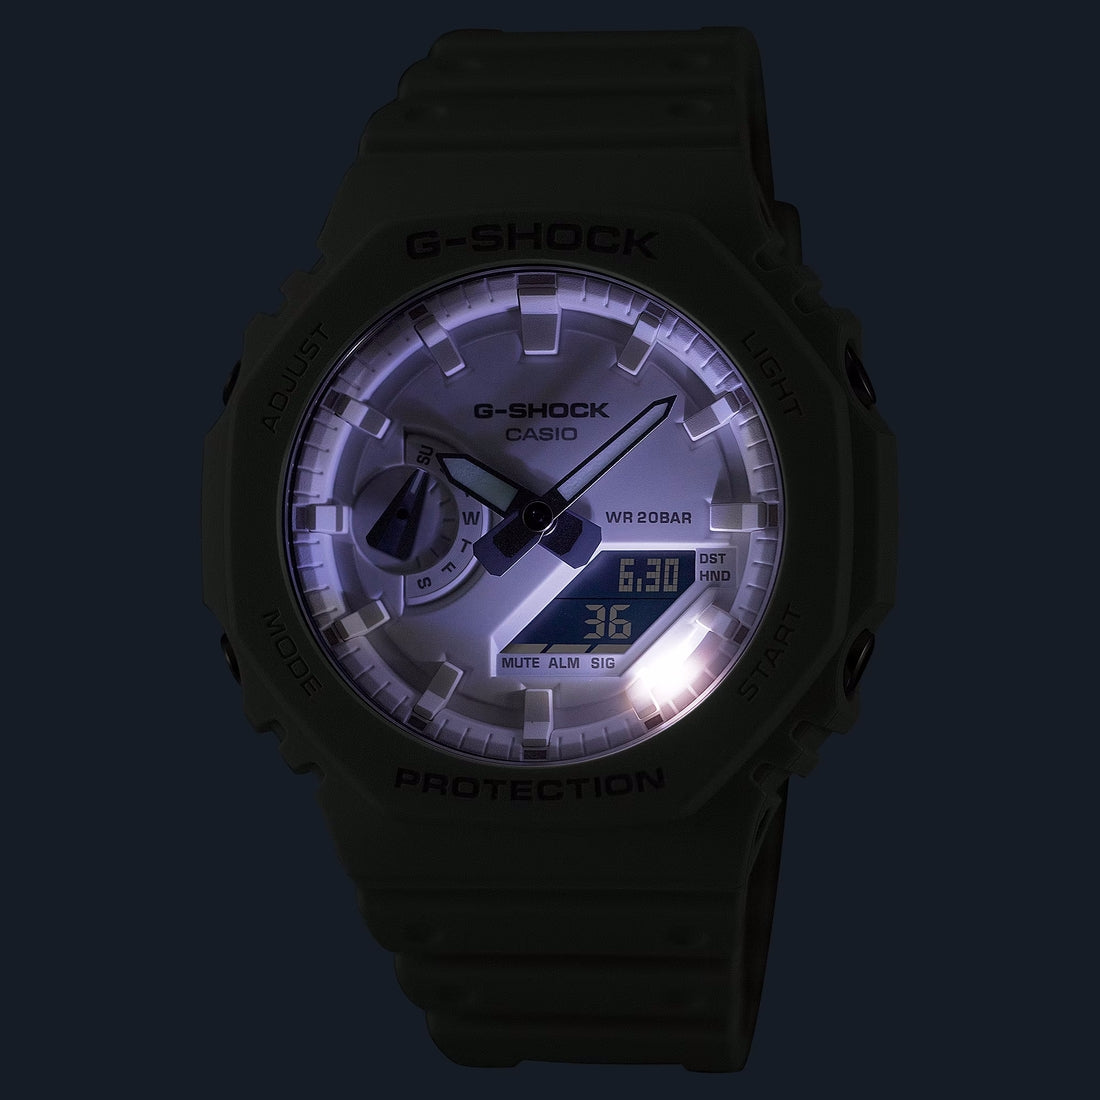 Orologio G-Shock GA-2100-7A7ER bianco monocromo